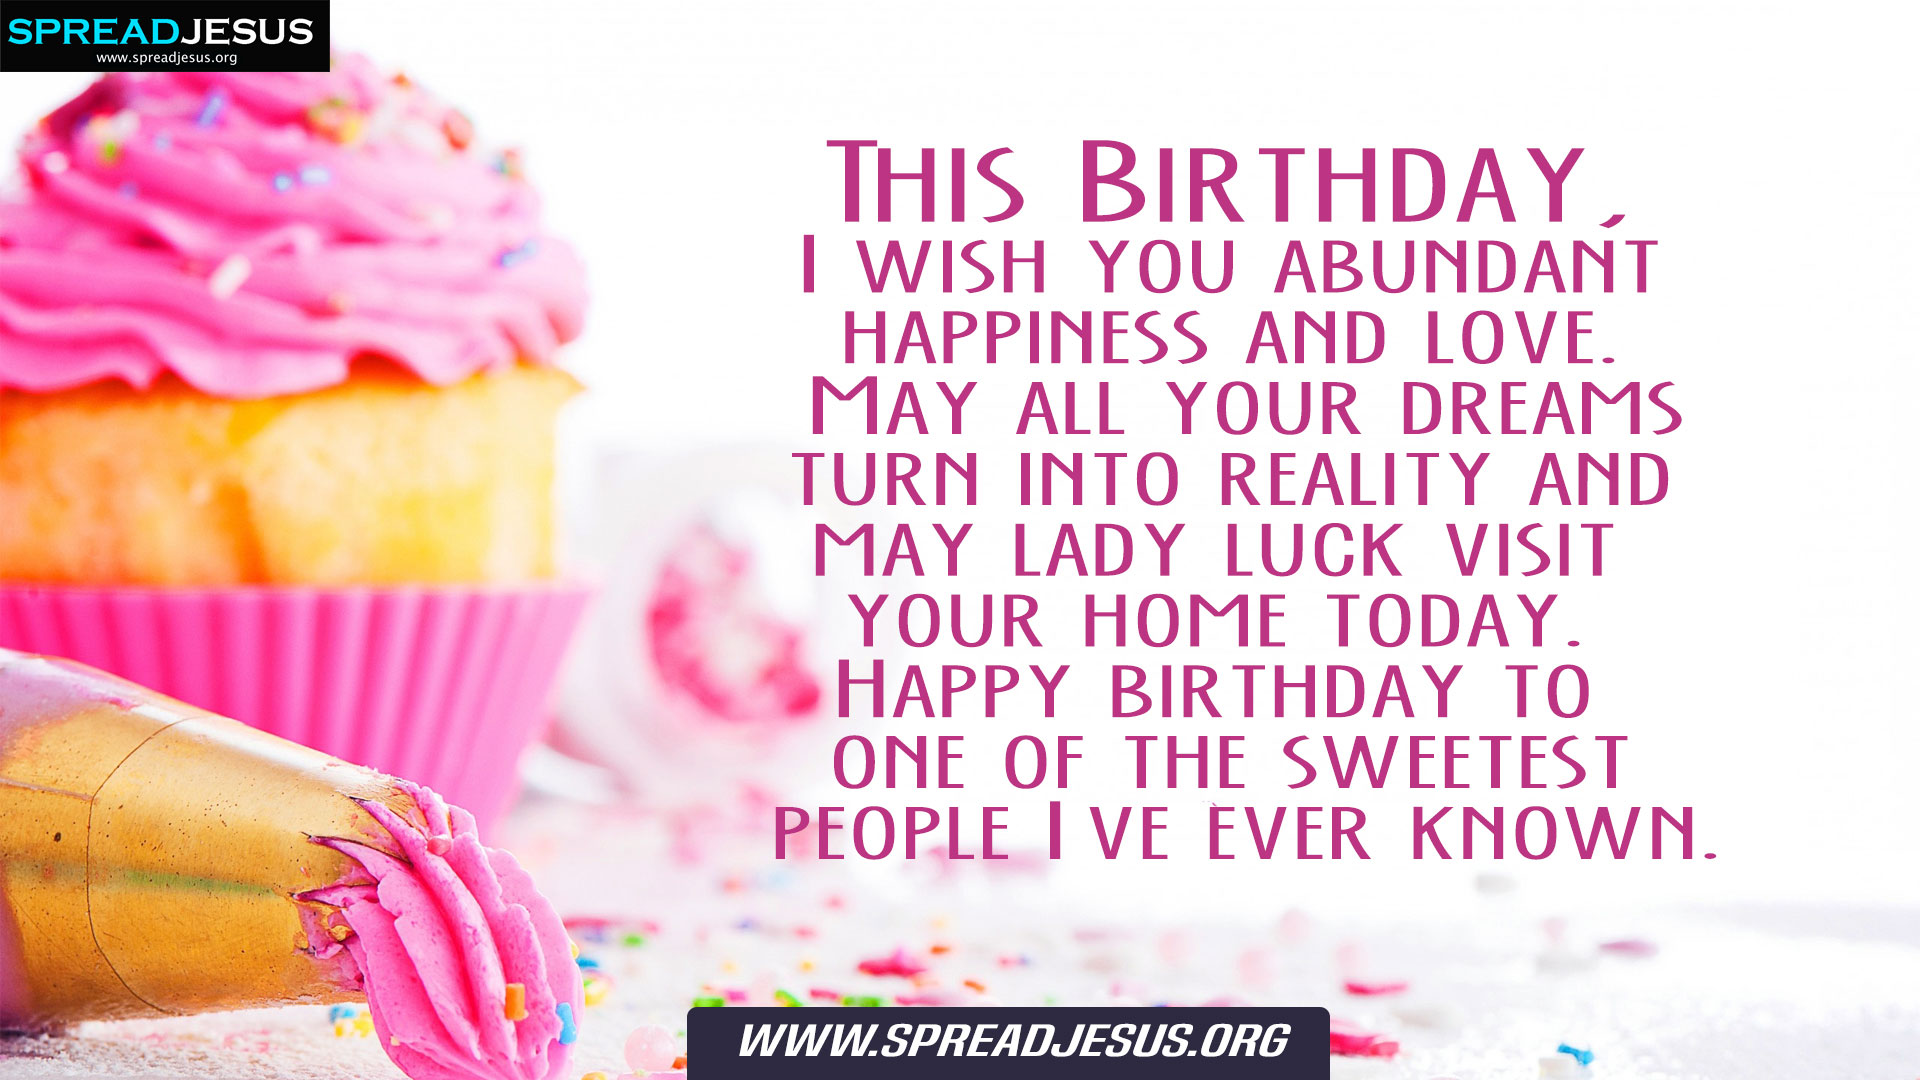 This birthday, I wish you abundant happiness